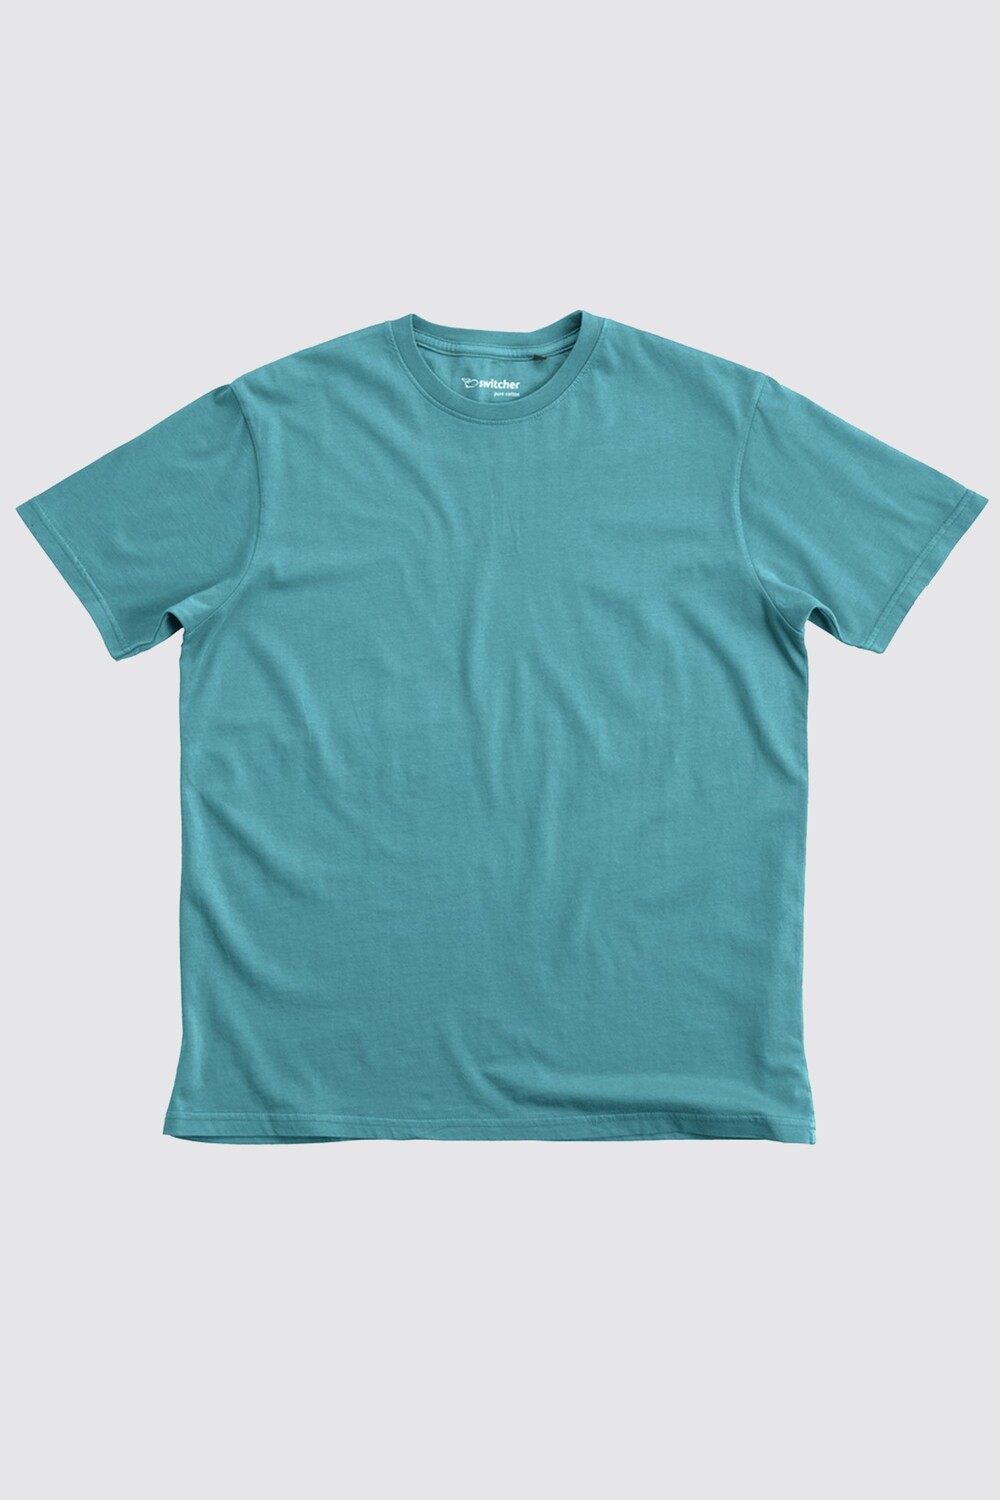 Switcher Men's pigment dyed  T-Shirt Alain